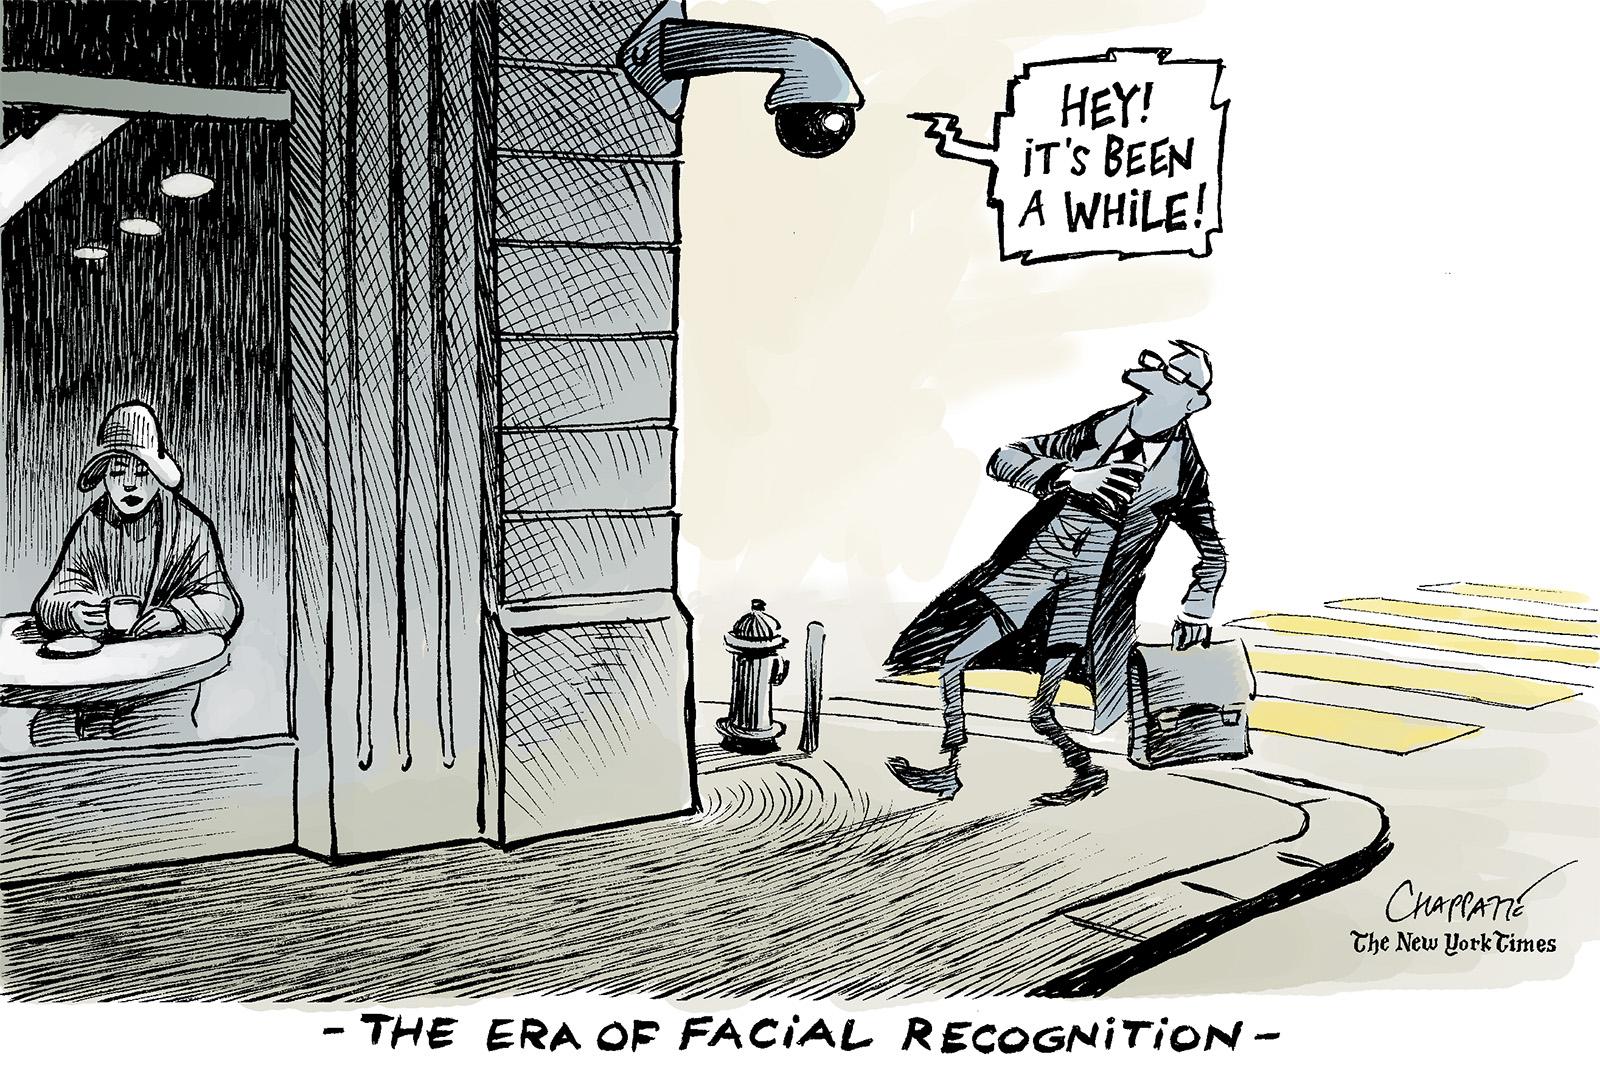 The era of facial recognition